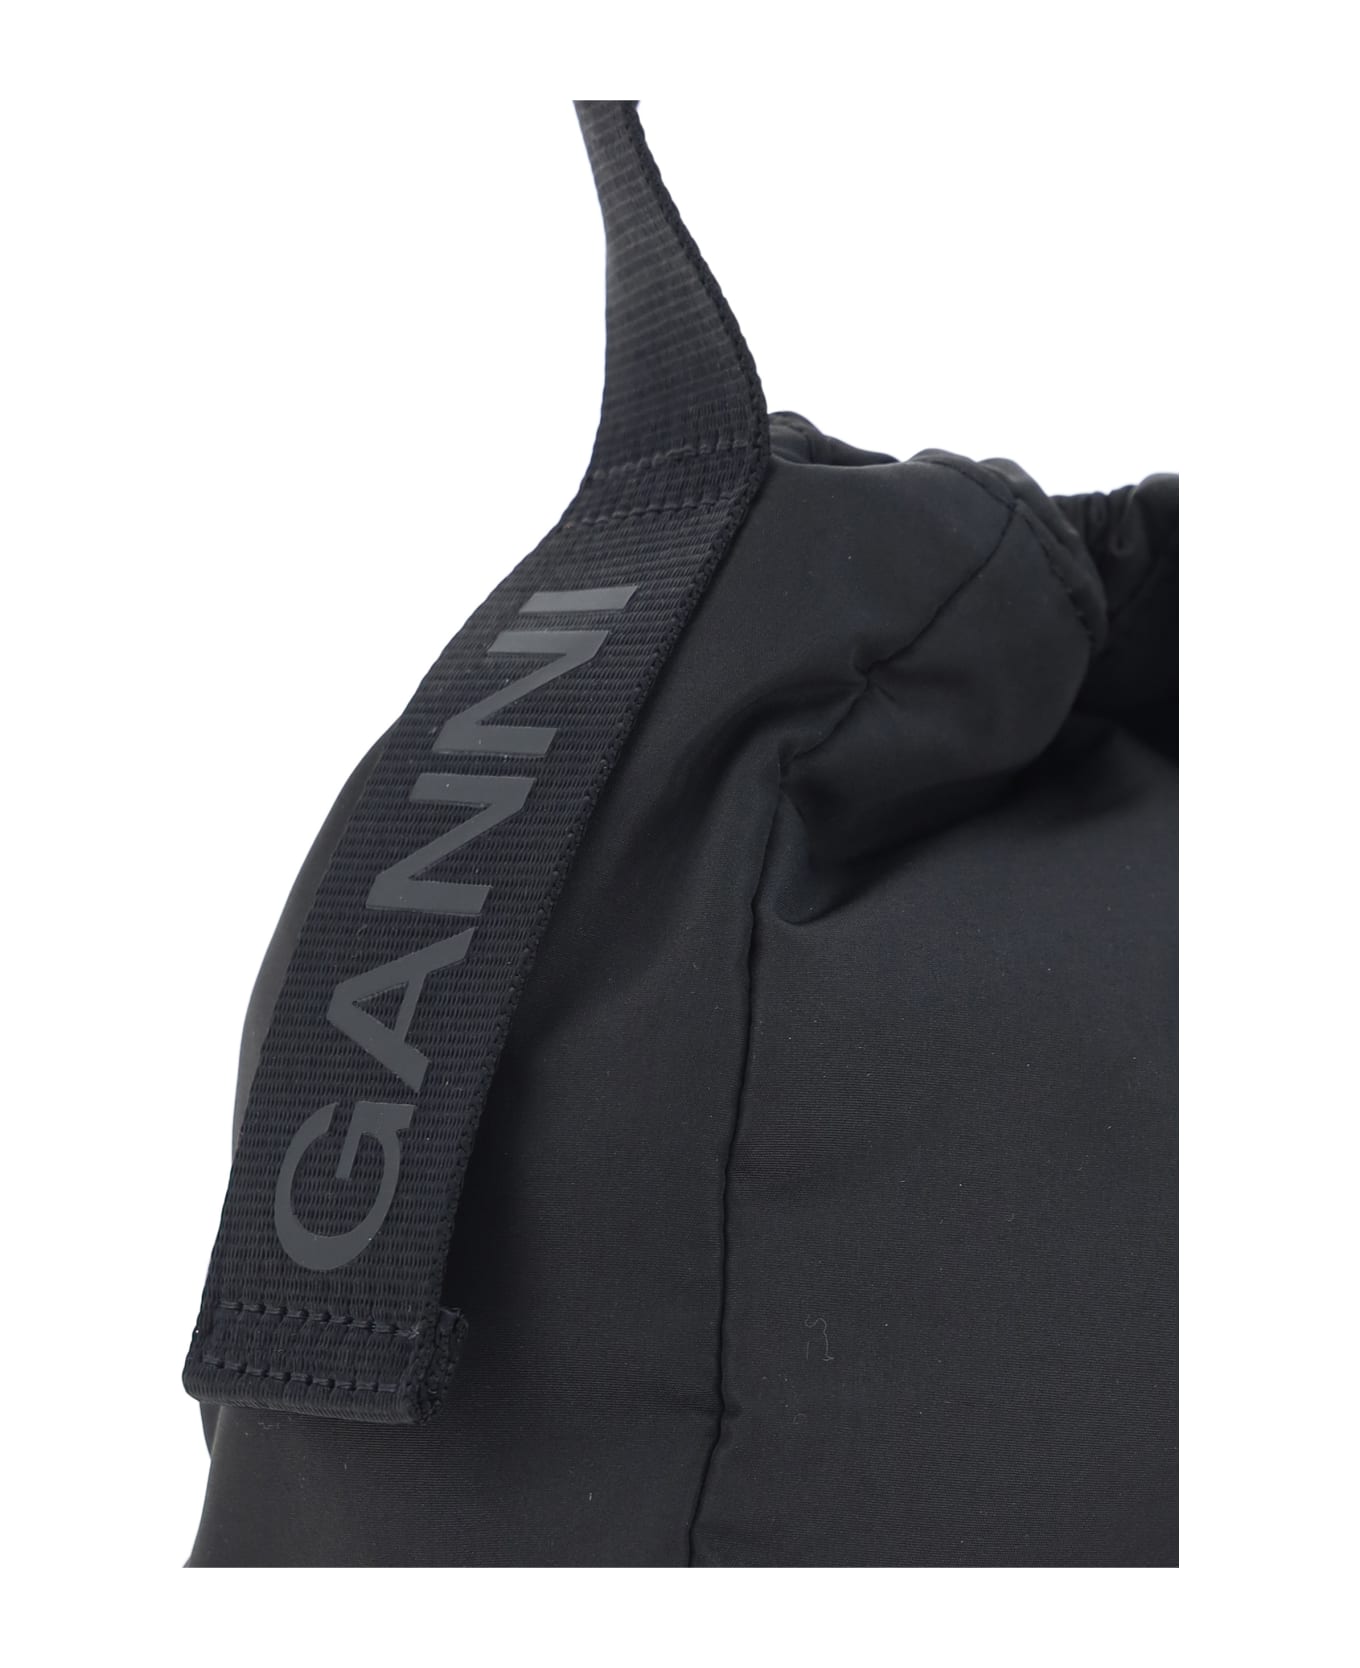 Ganni Recycled Tech Handbag - Black バッグ